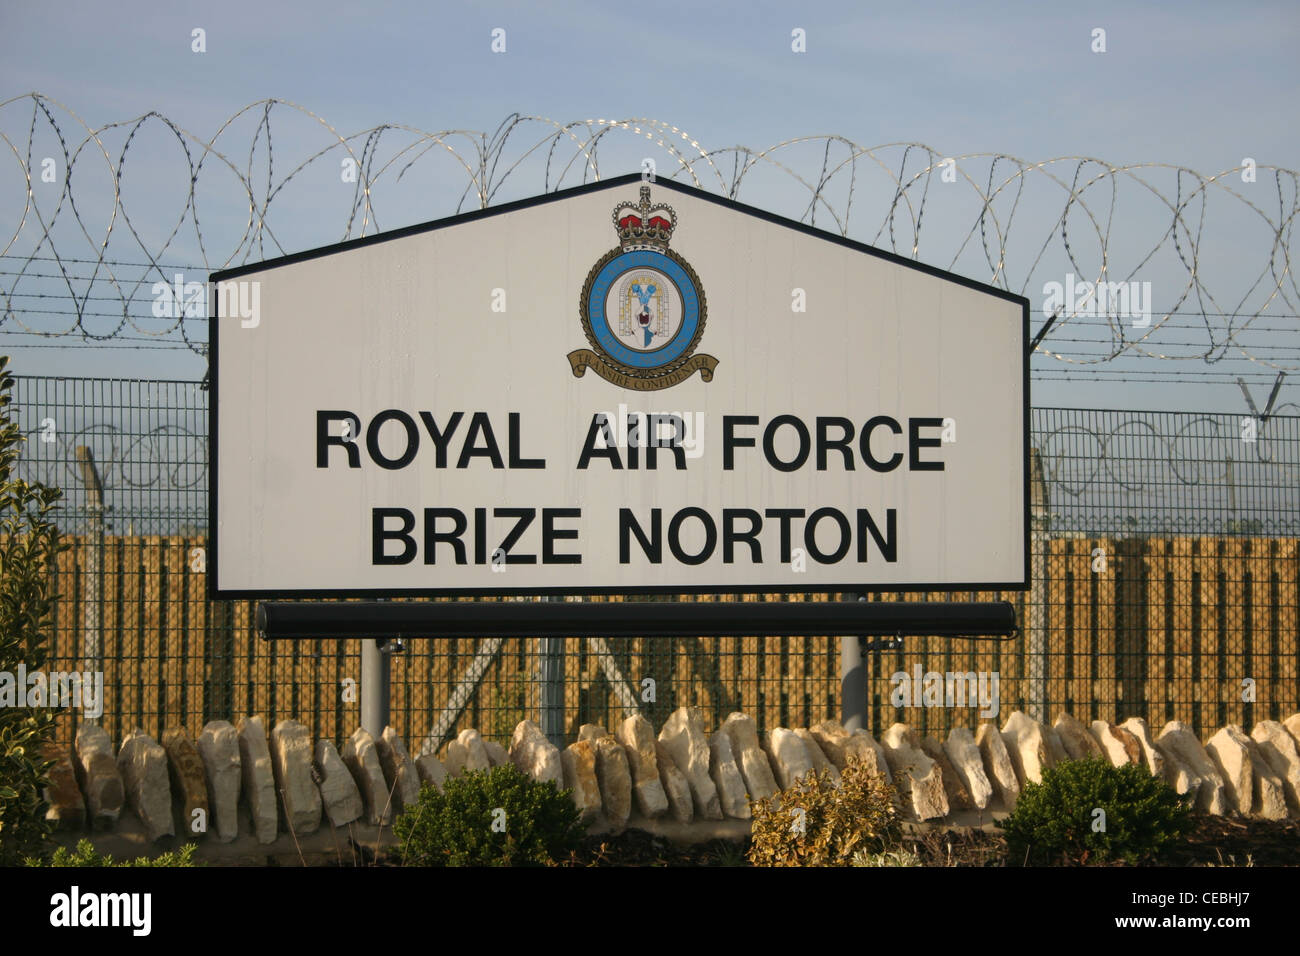 ROYAL AIR FORCE RAF BRIZE NORTON Stock Photo